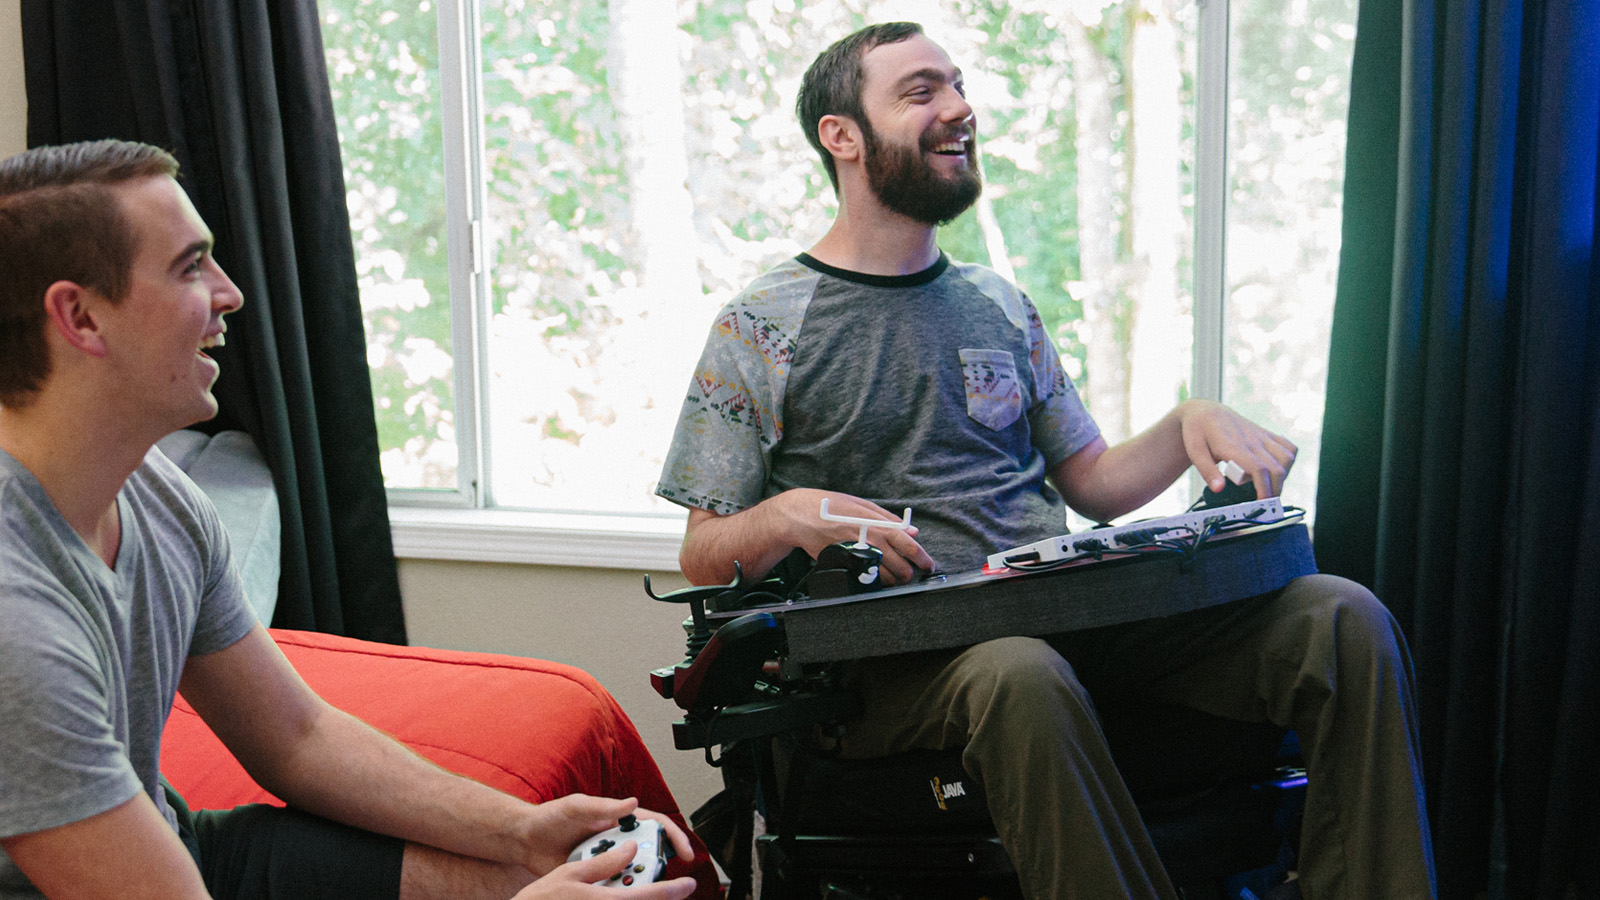 Spencer Allen 使用 Xbox Adaptive Controller 與朋友一起玩遊戲。